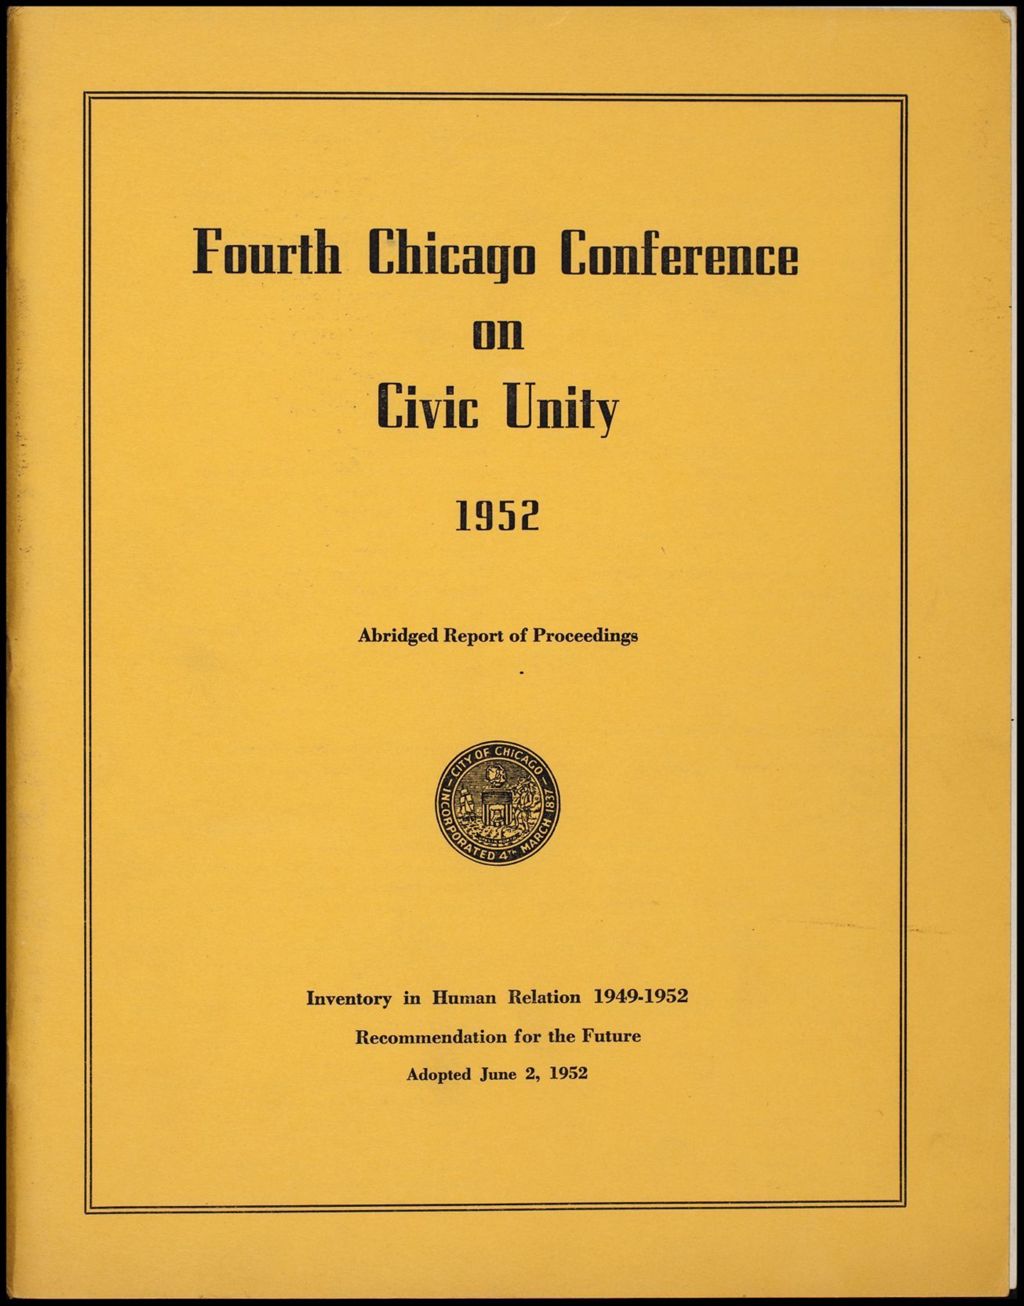 Miniature of Chicago Conference on Civic Unity, 1952 (Folder I-2803)